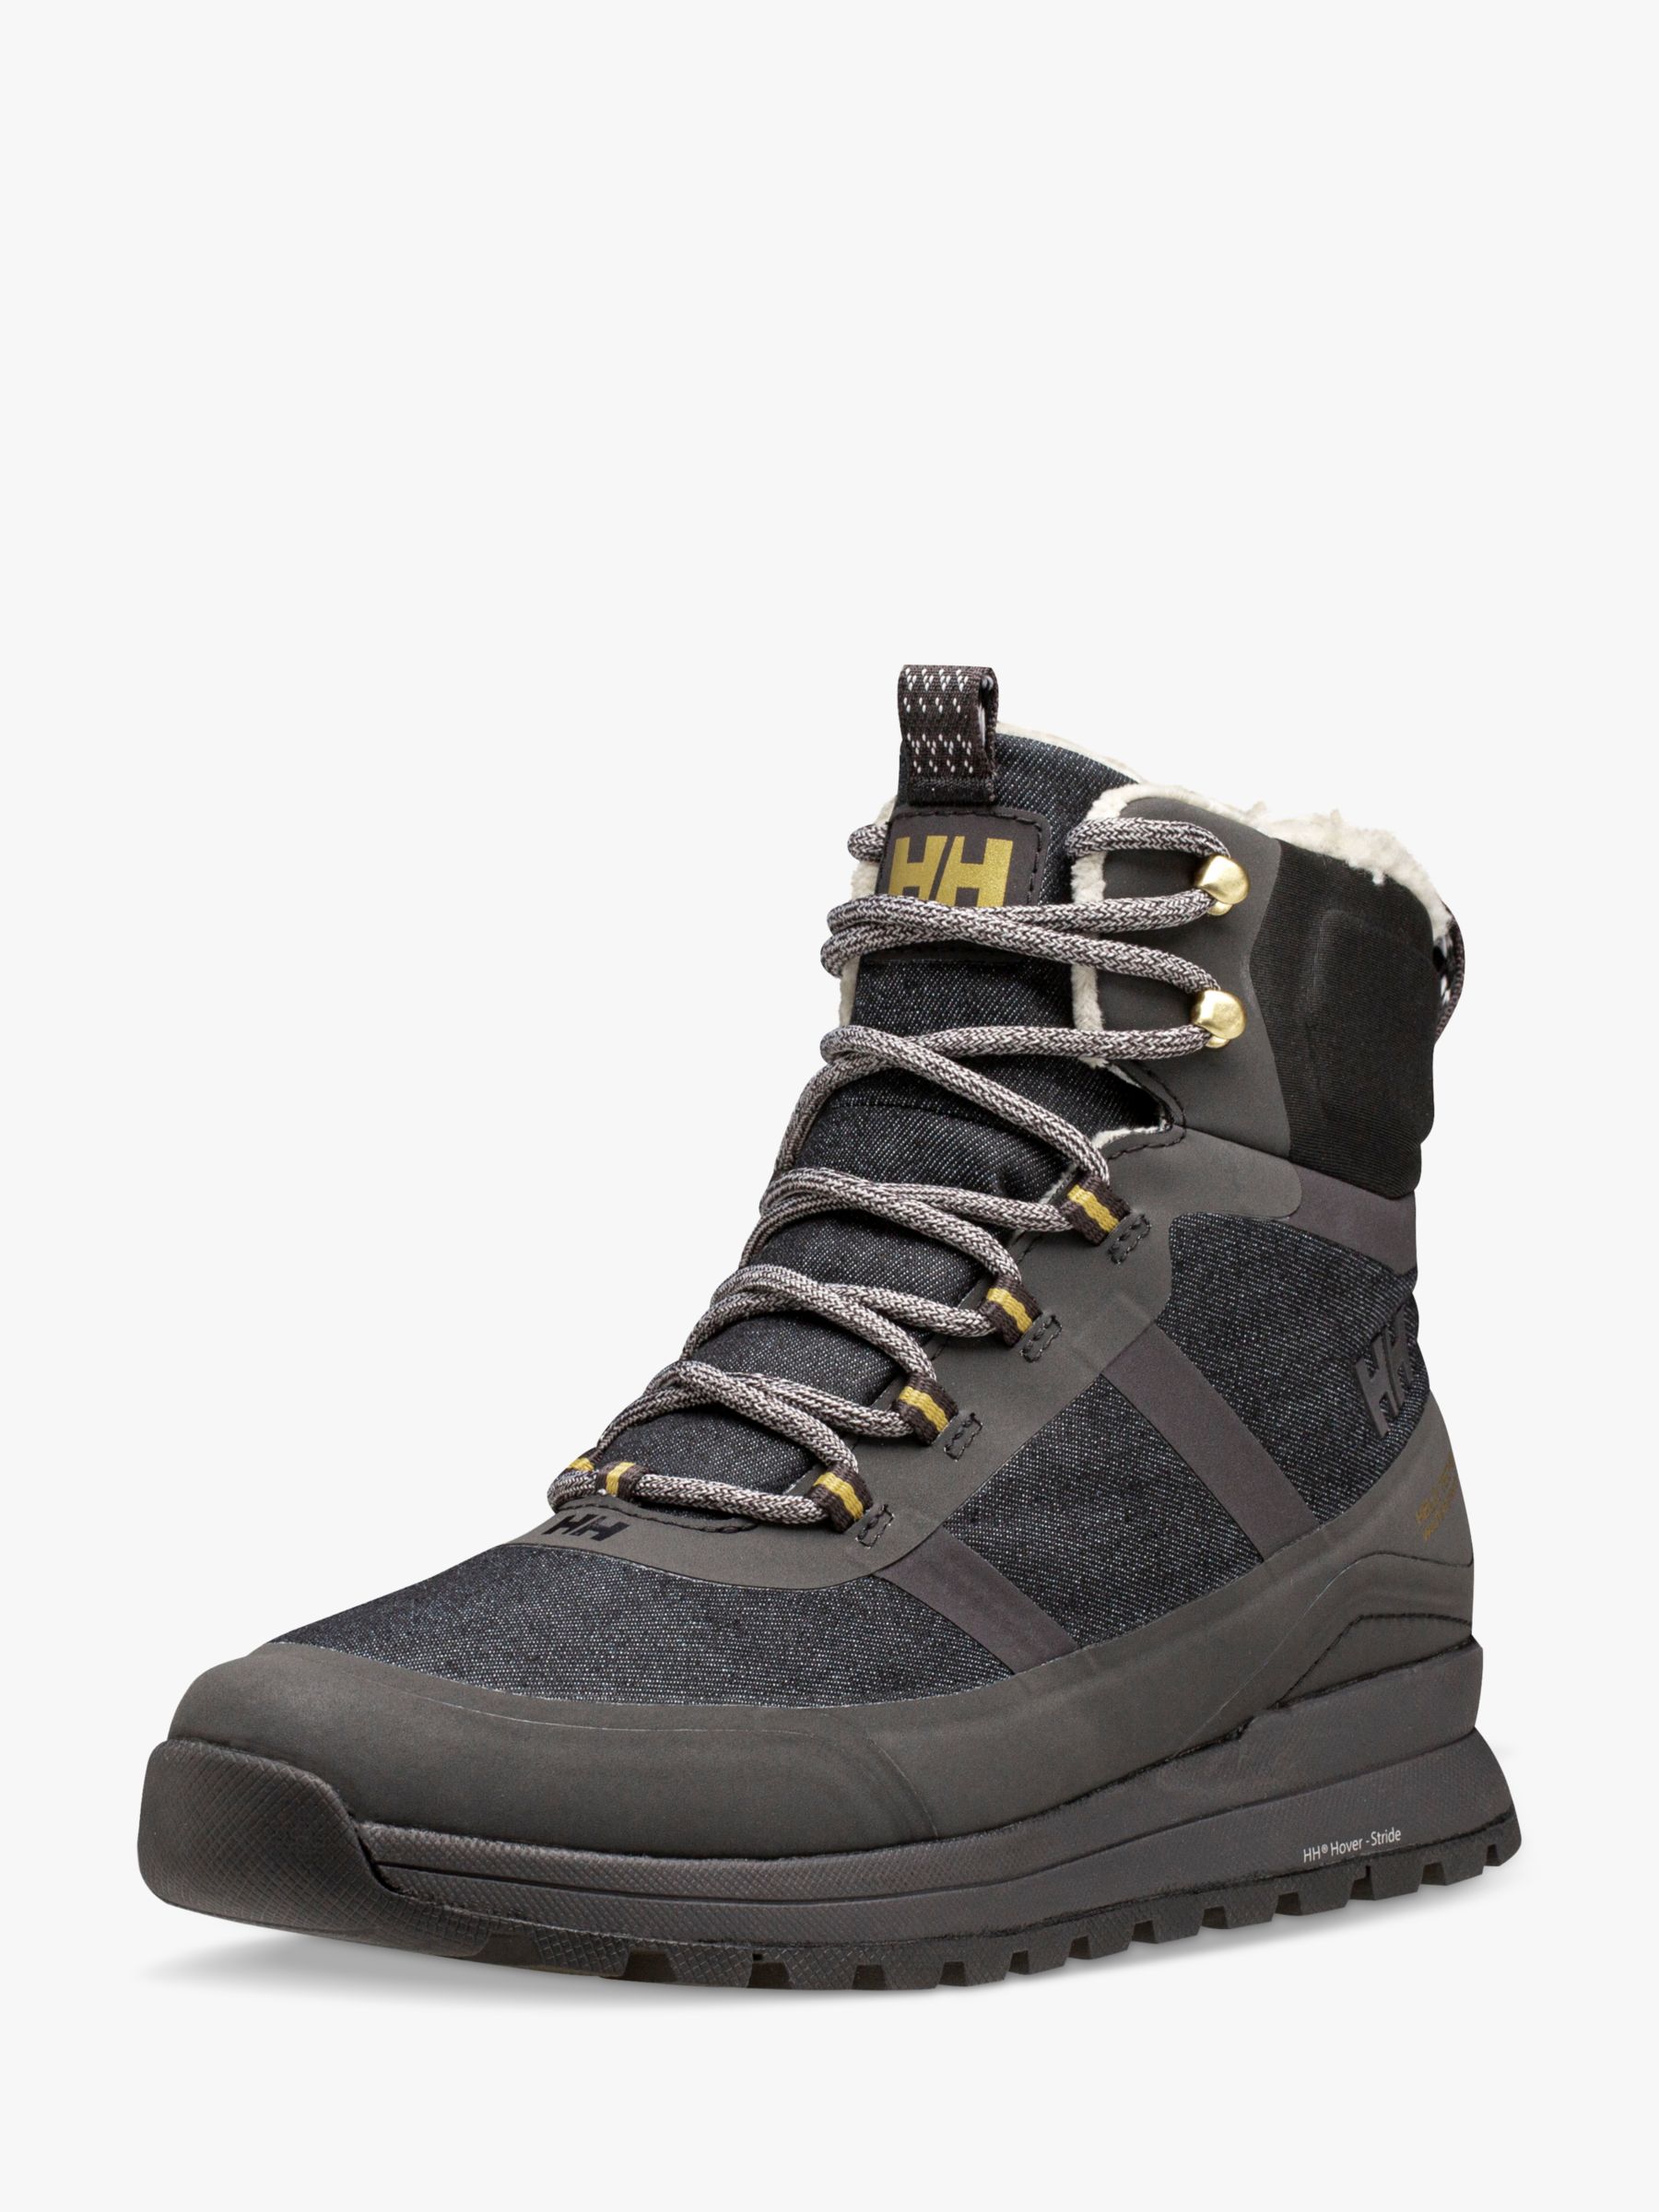 Helly Hansen Whitley Waterproof Winter Boots, Black, 6